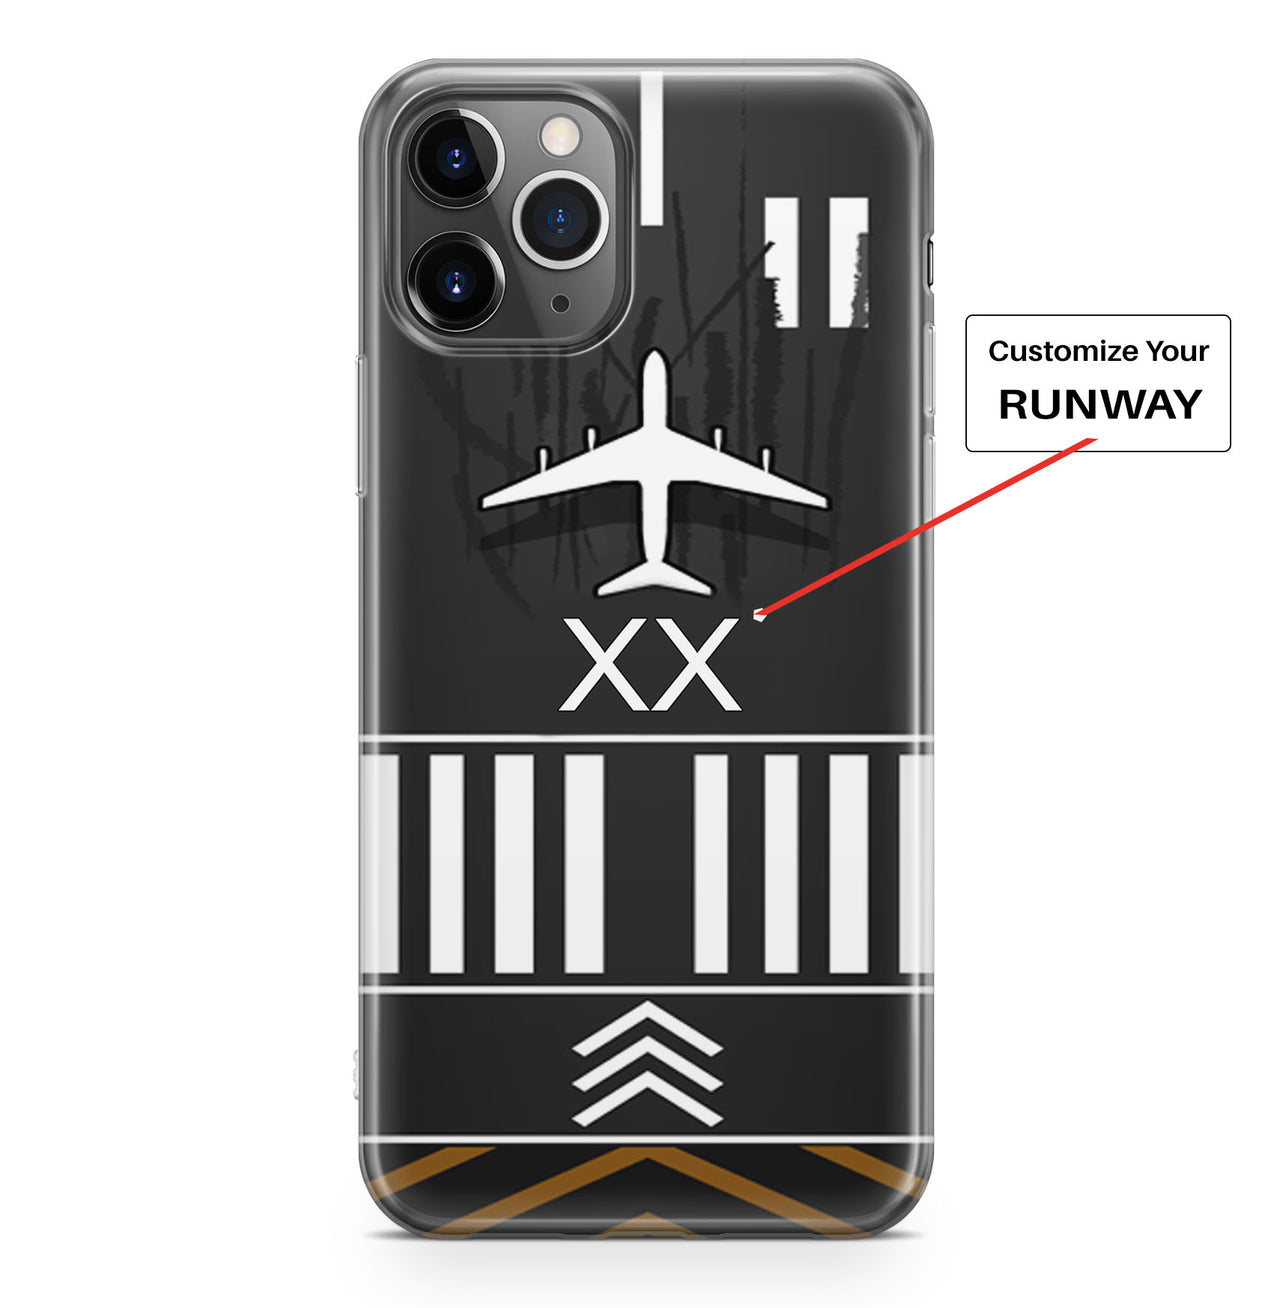 Runway (Customizable) Designed iPhone Cases